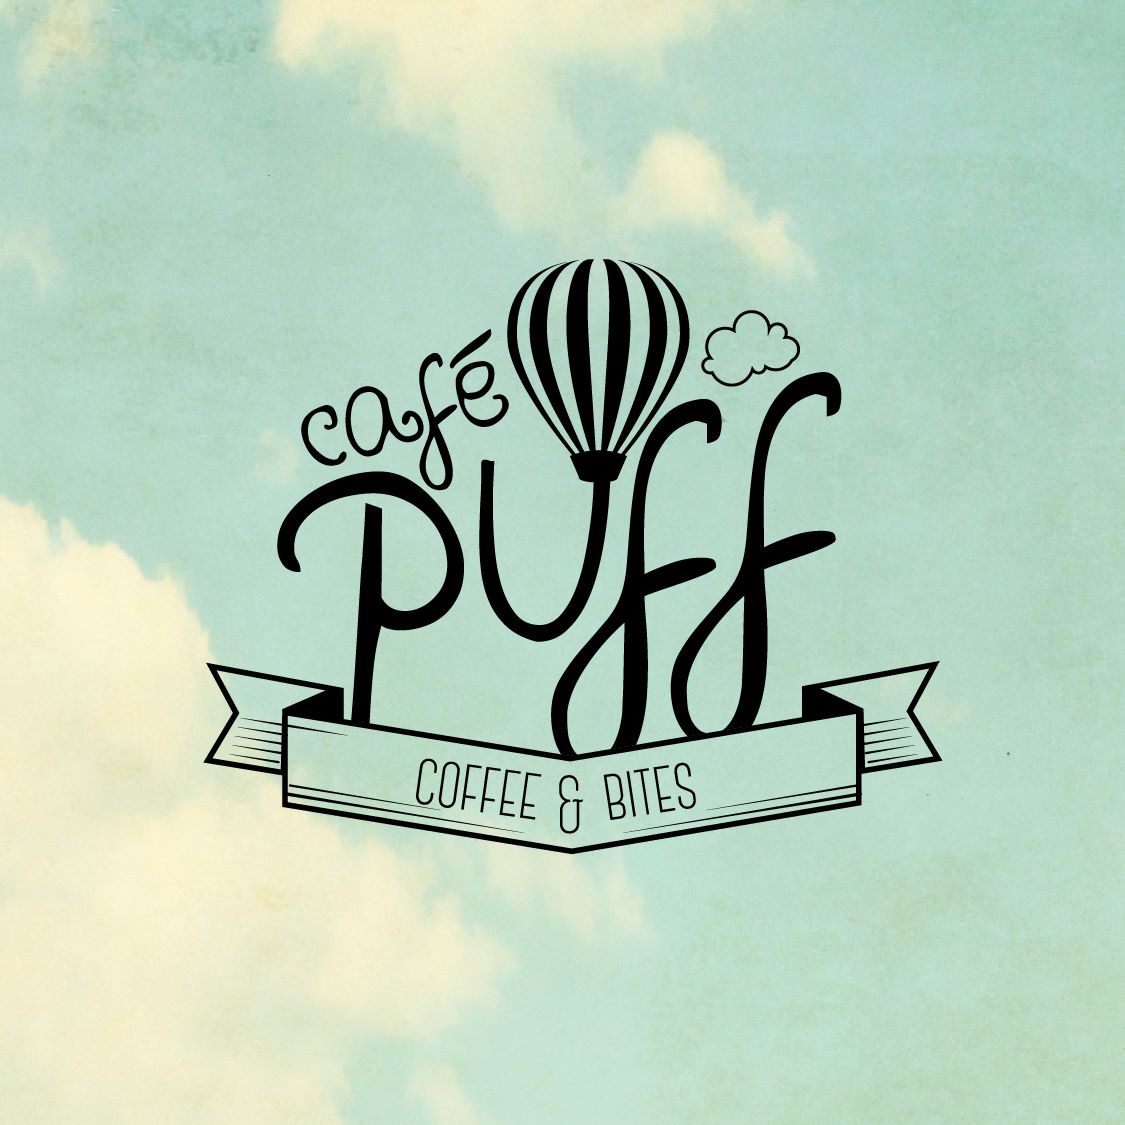 Café Puff